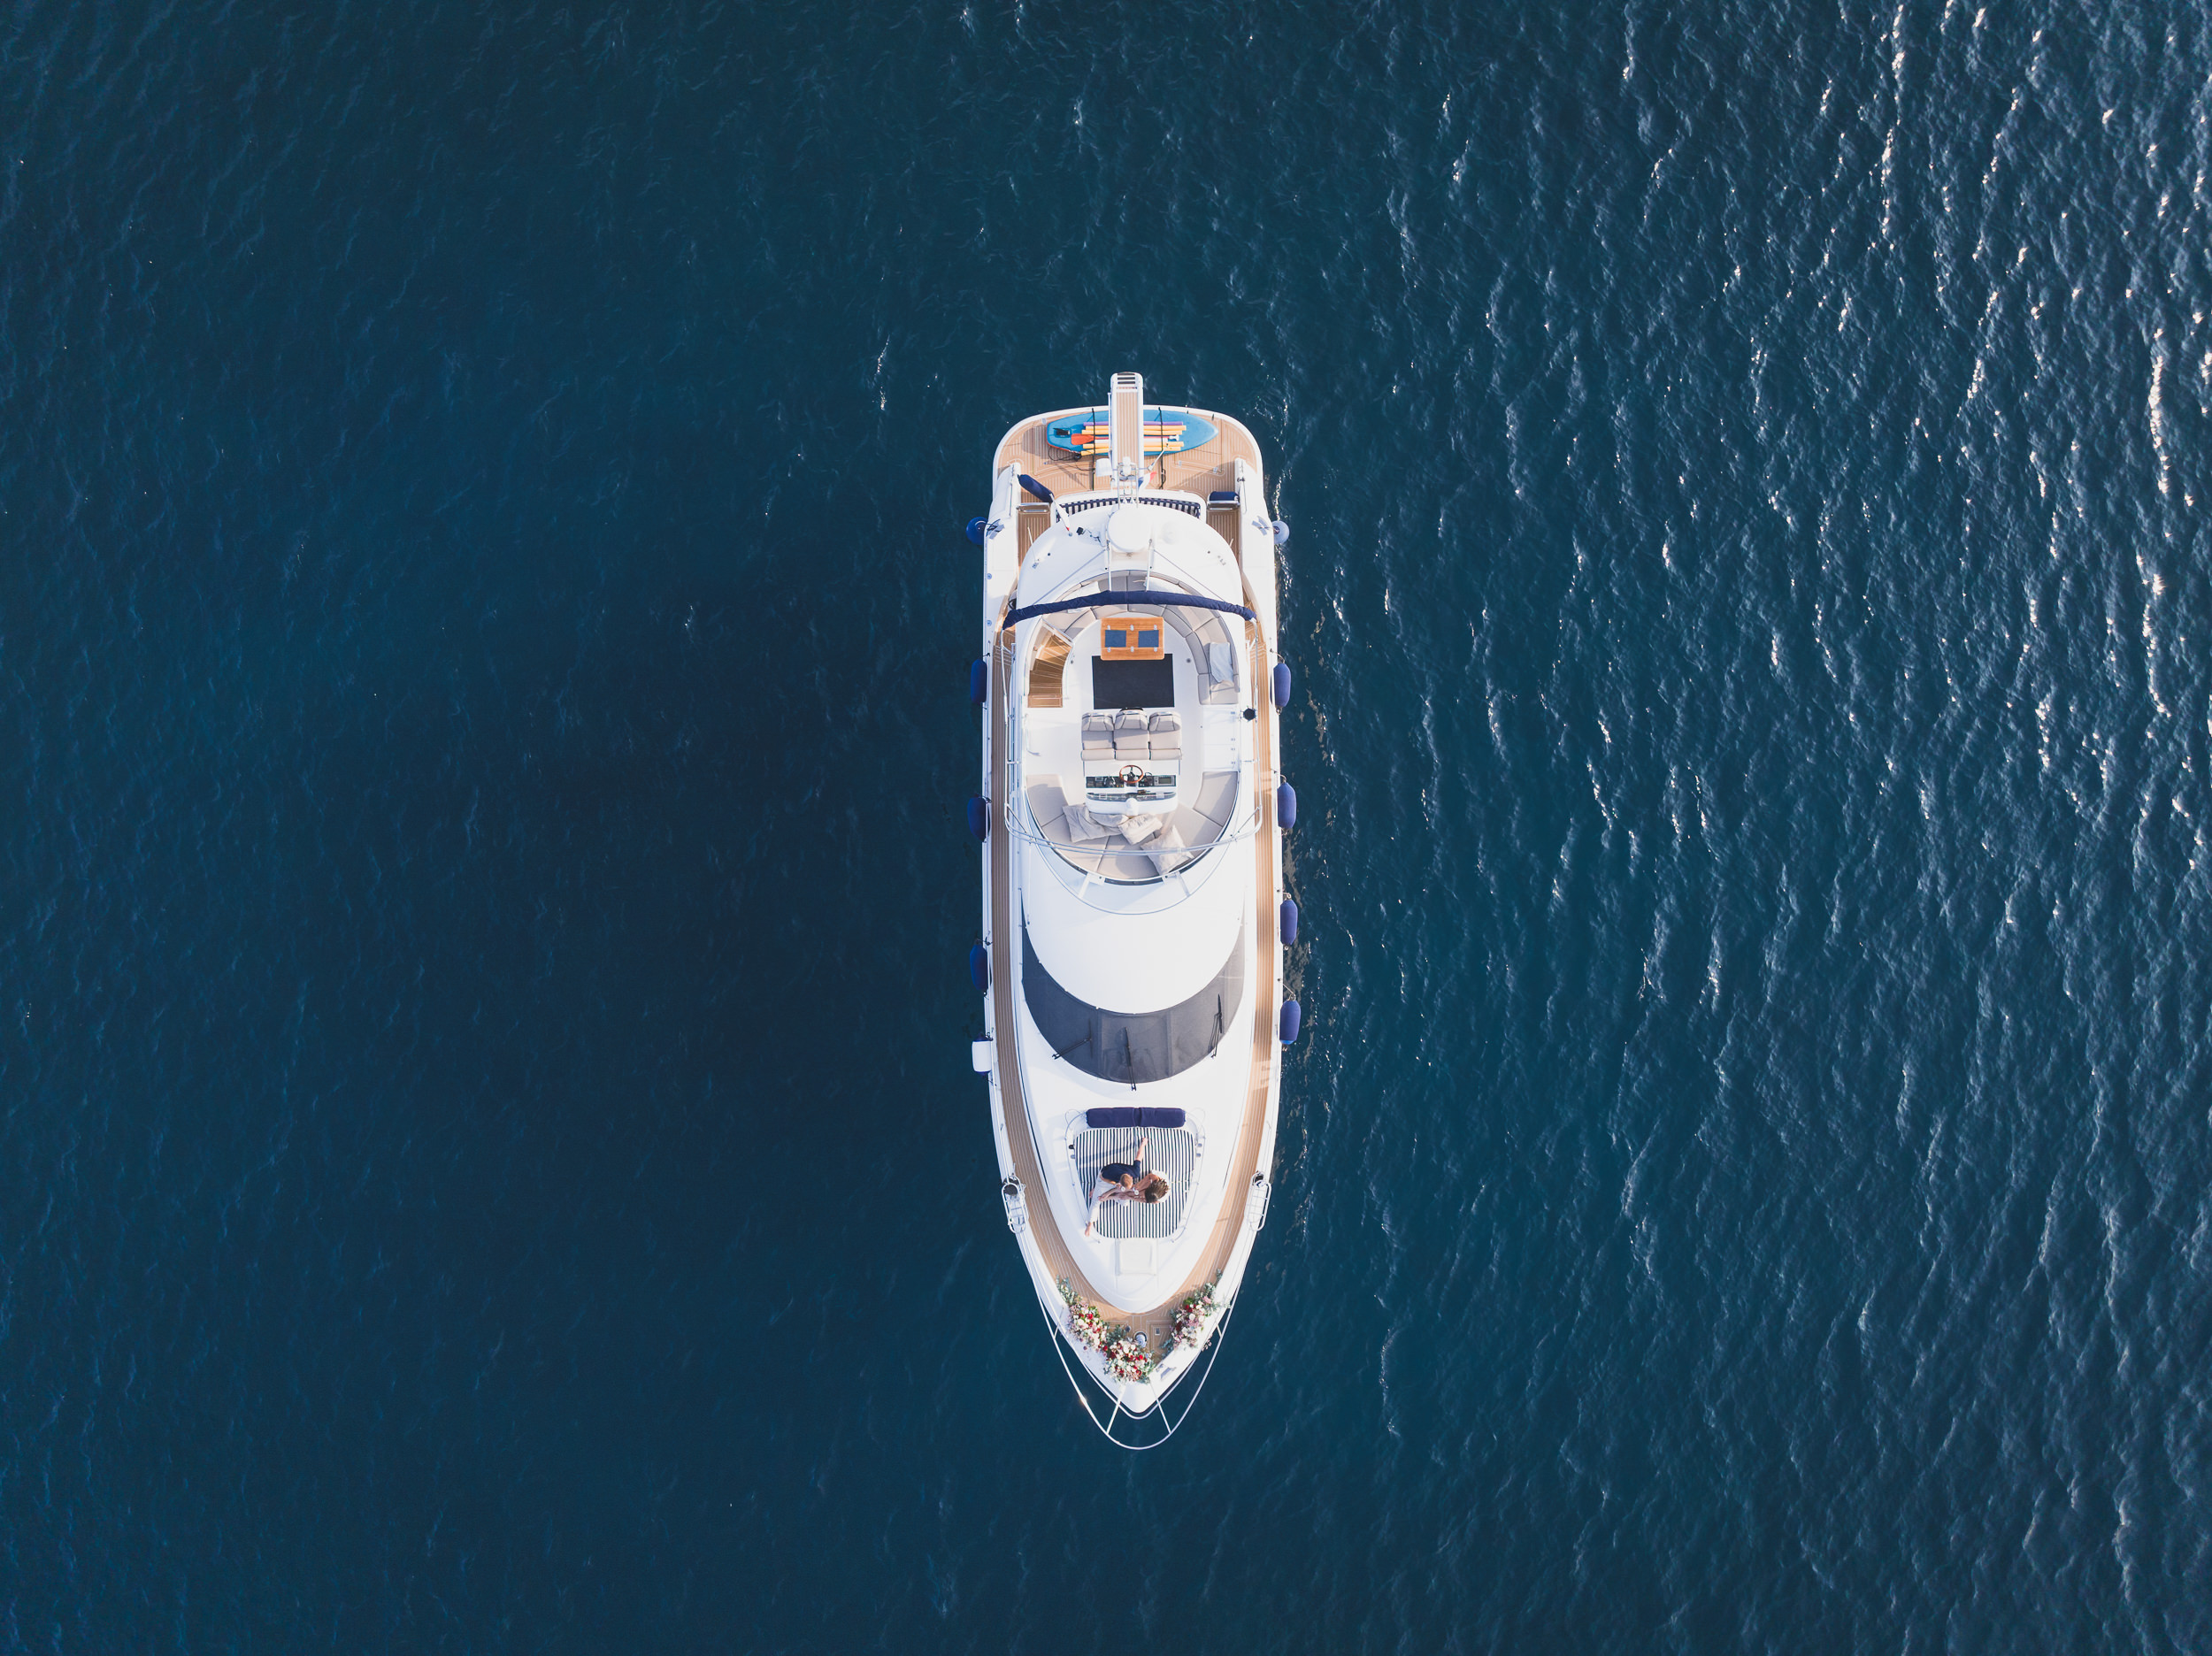 French Riviera Yacht Boat Proposal 144